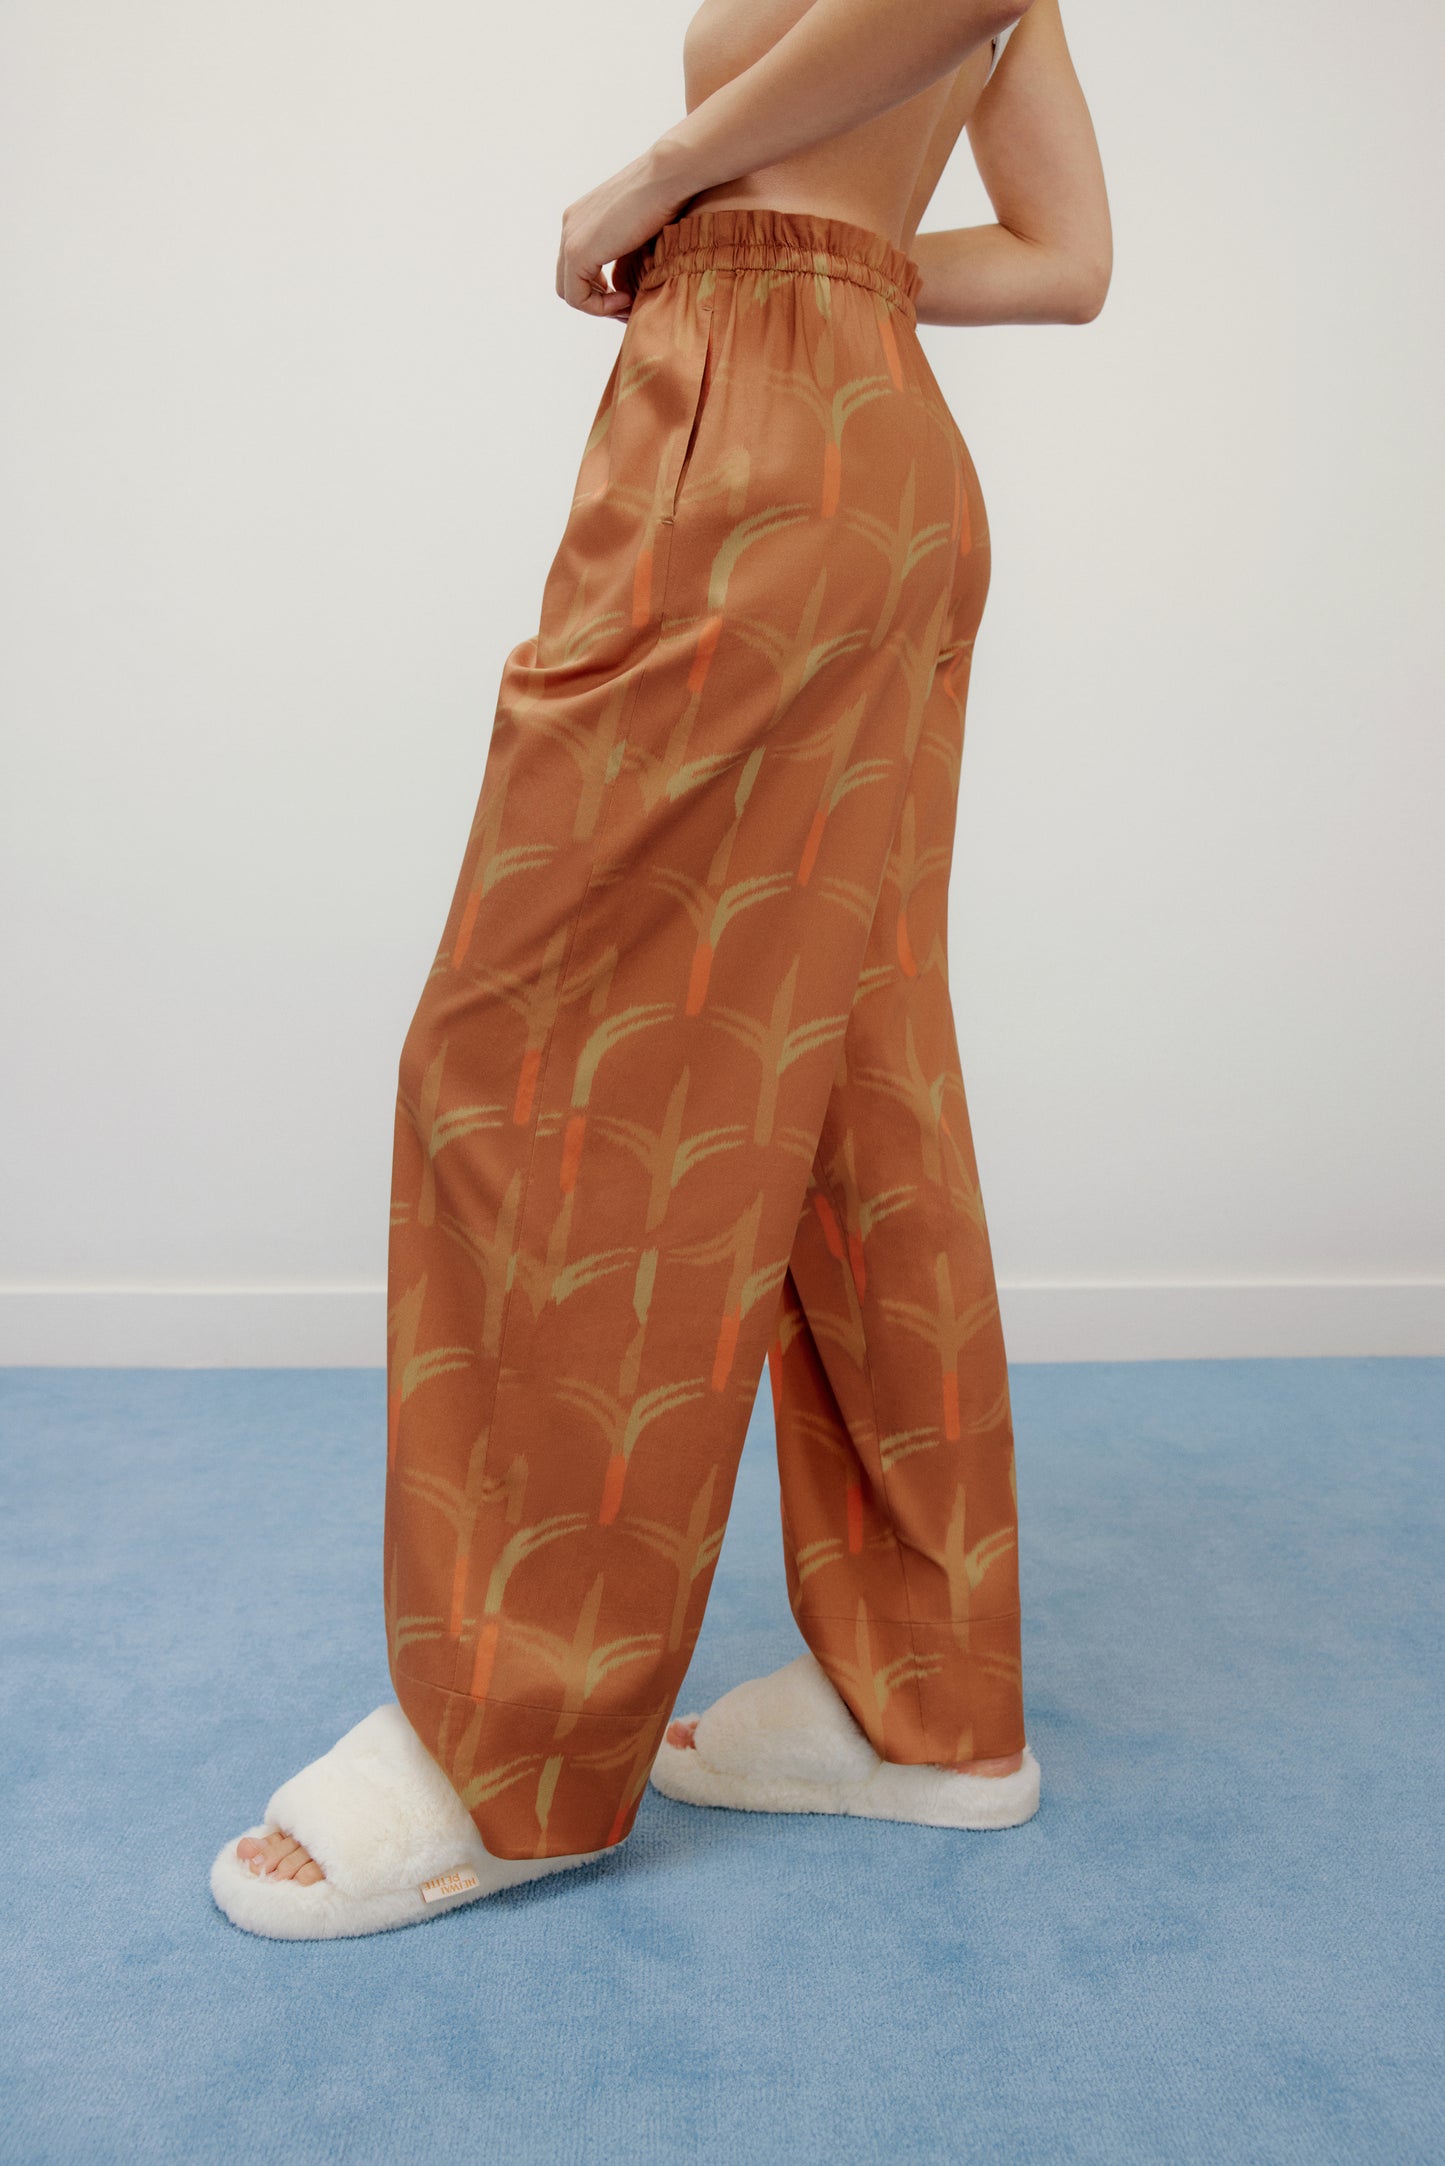 the side of woman wearing brown pajama pants